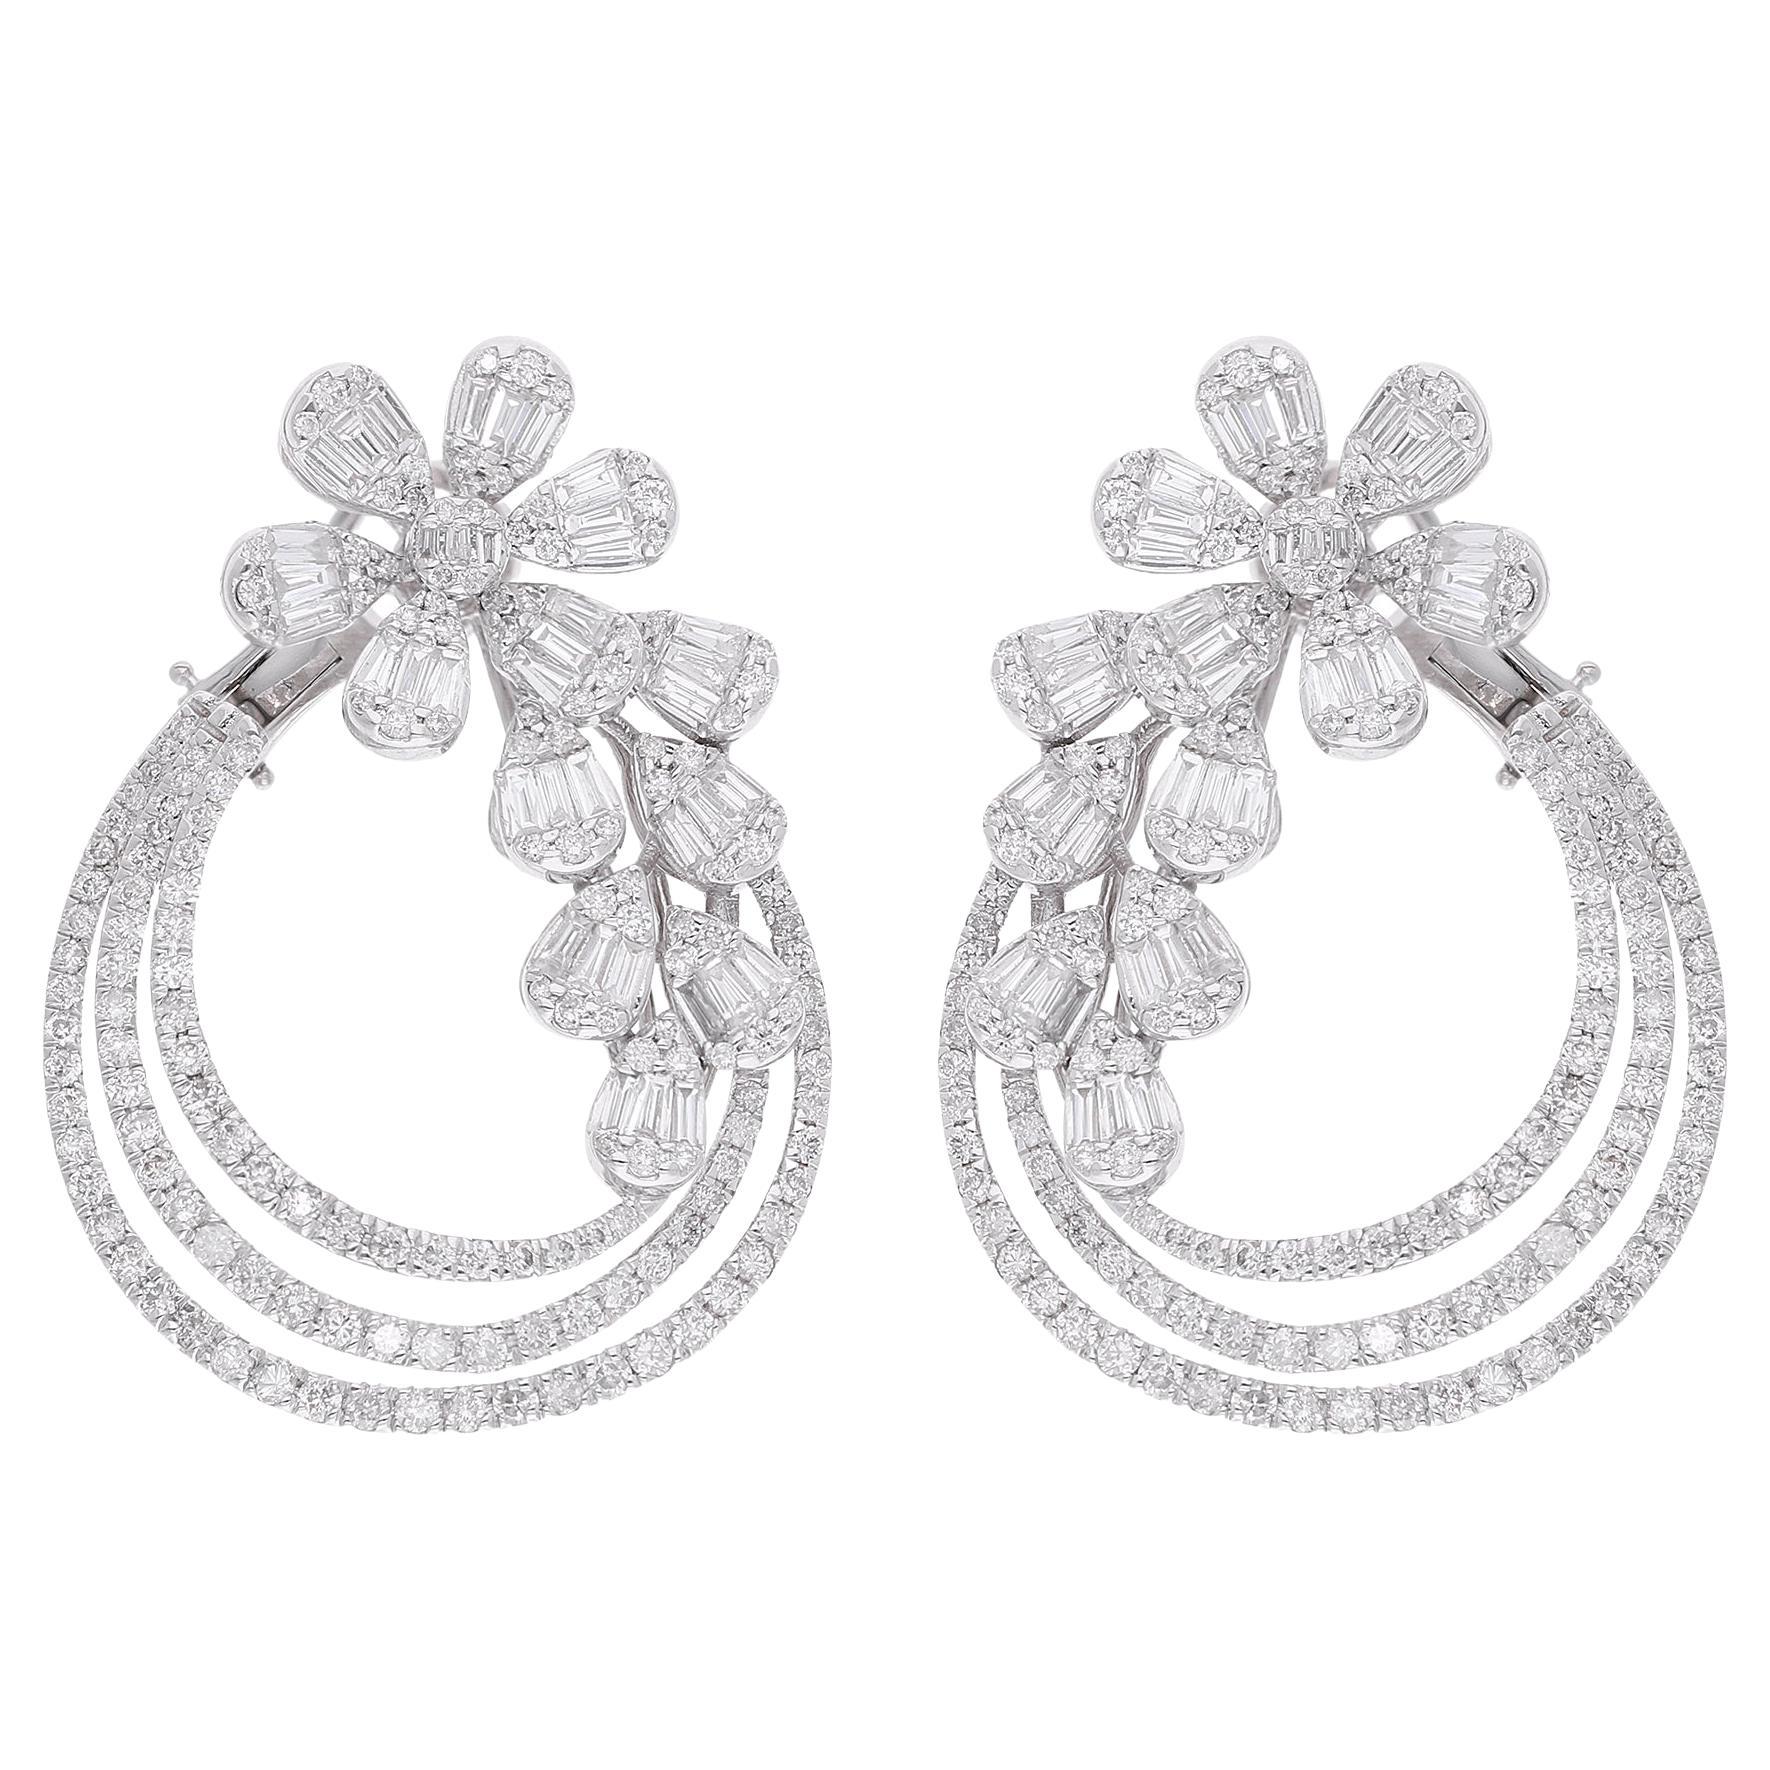 4.31 Carat Baguette Round Diamond Earrings 18 Karat White Gold Handmade Jewelry For Sale